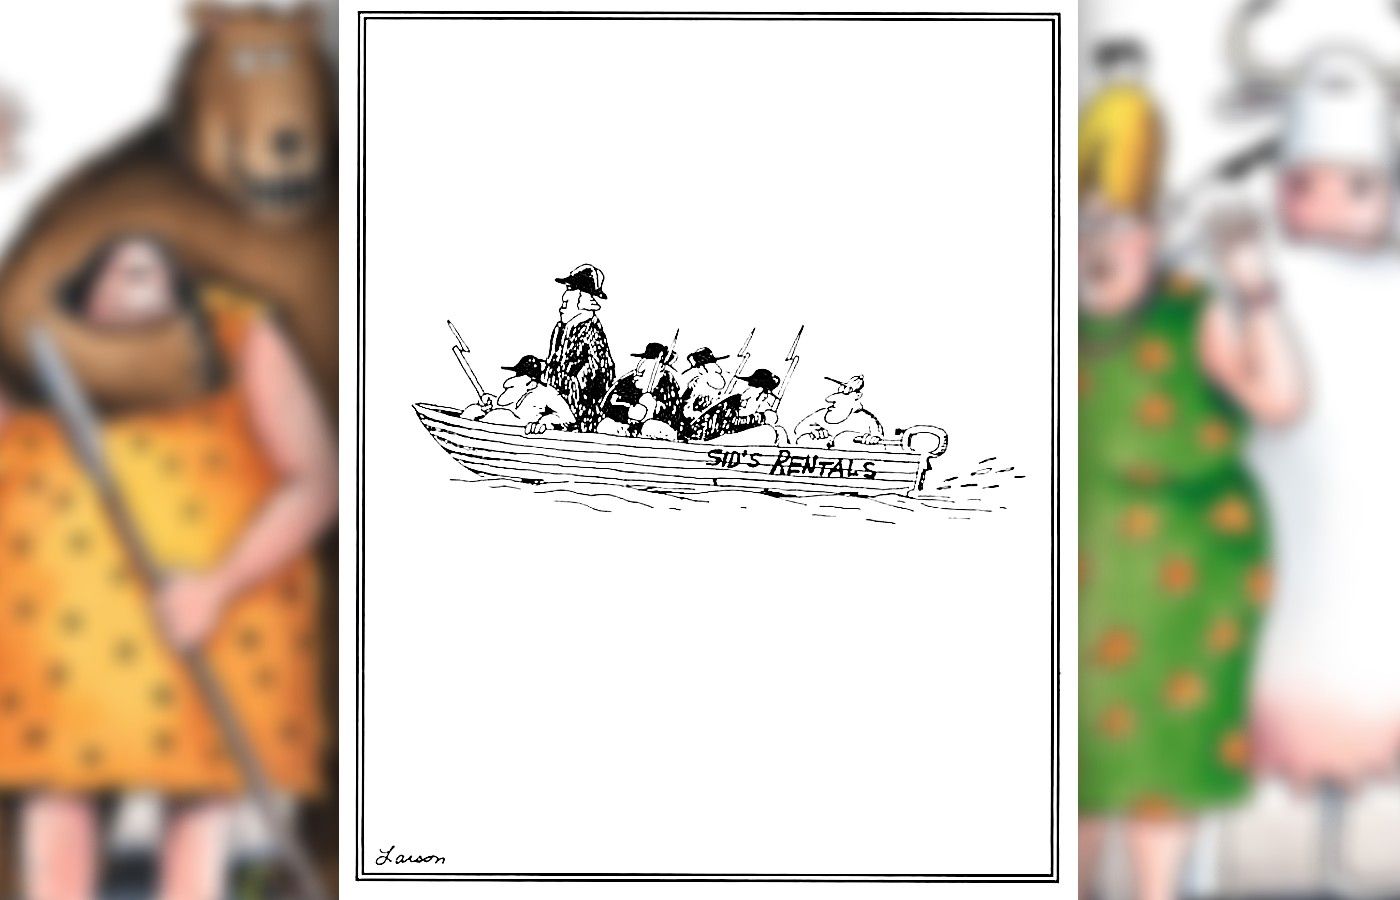 far side comic where washington crosses the delaware in a rental boat